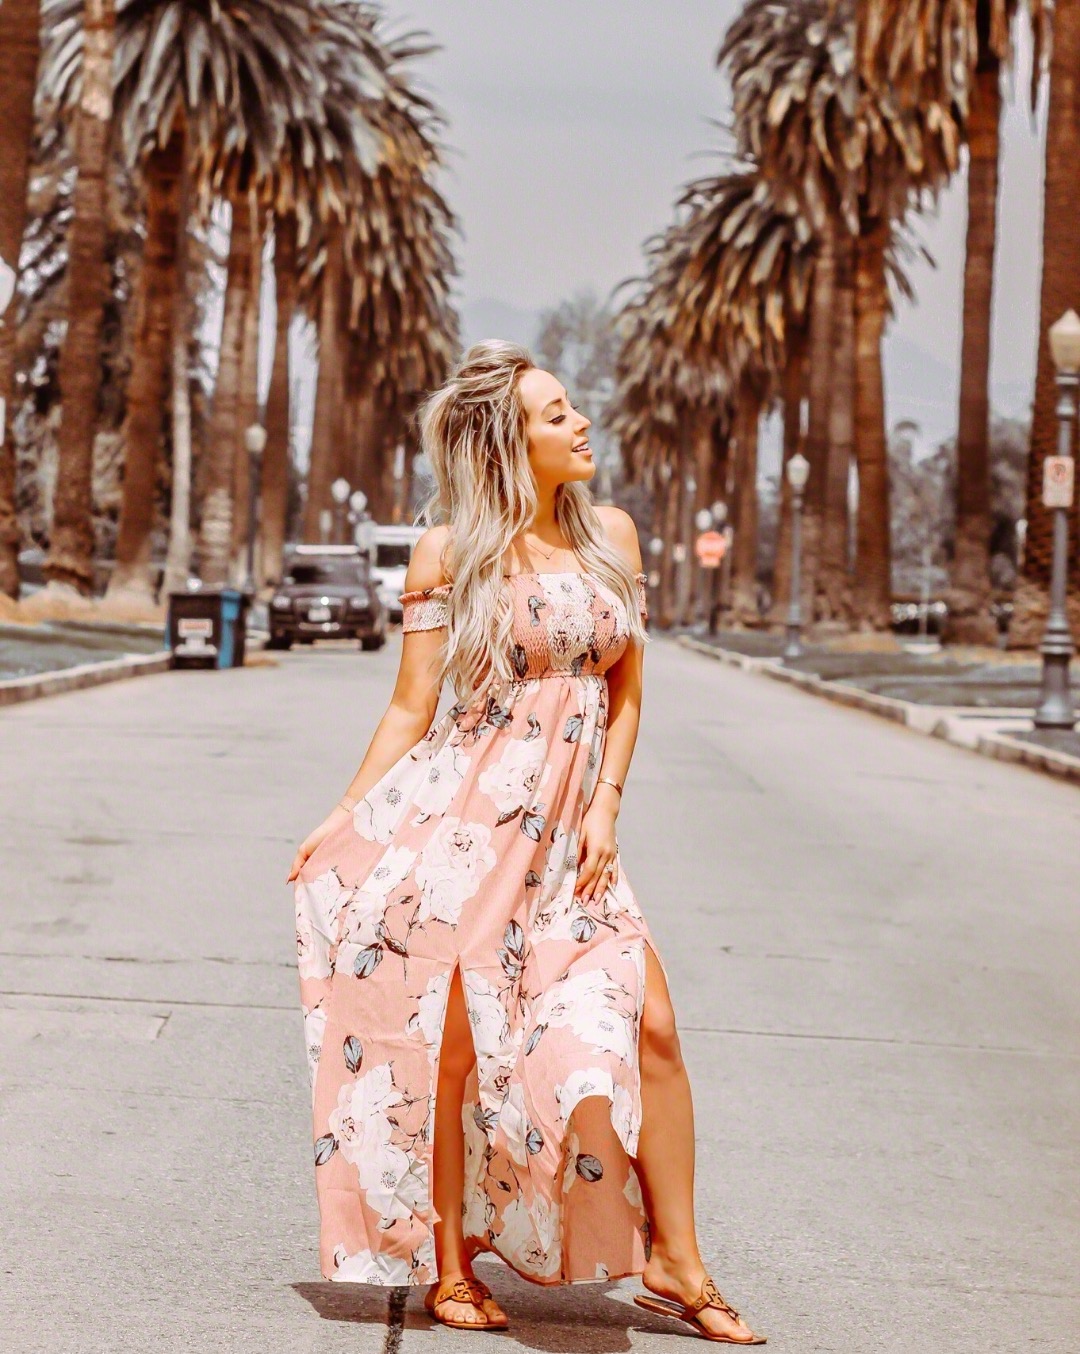 Blondie in the City Instagram | California Love